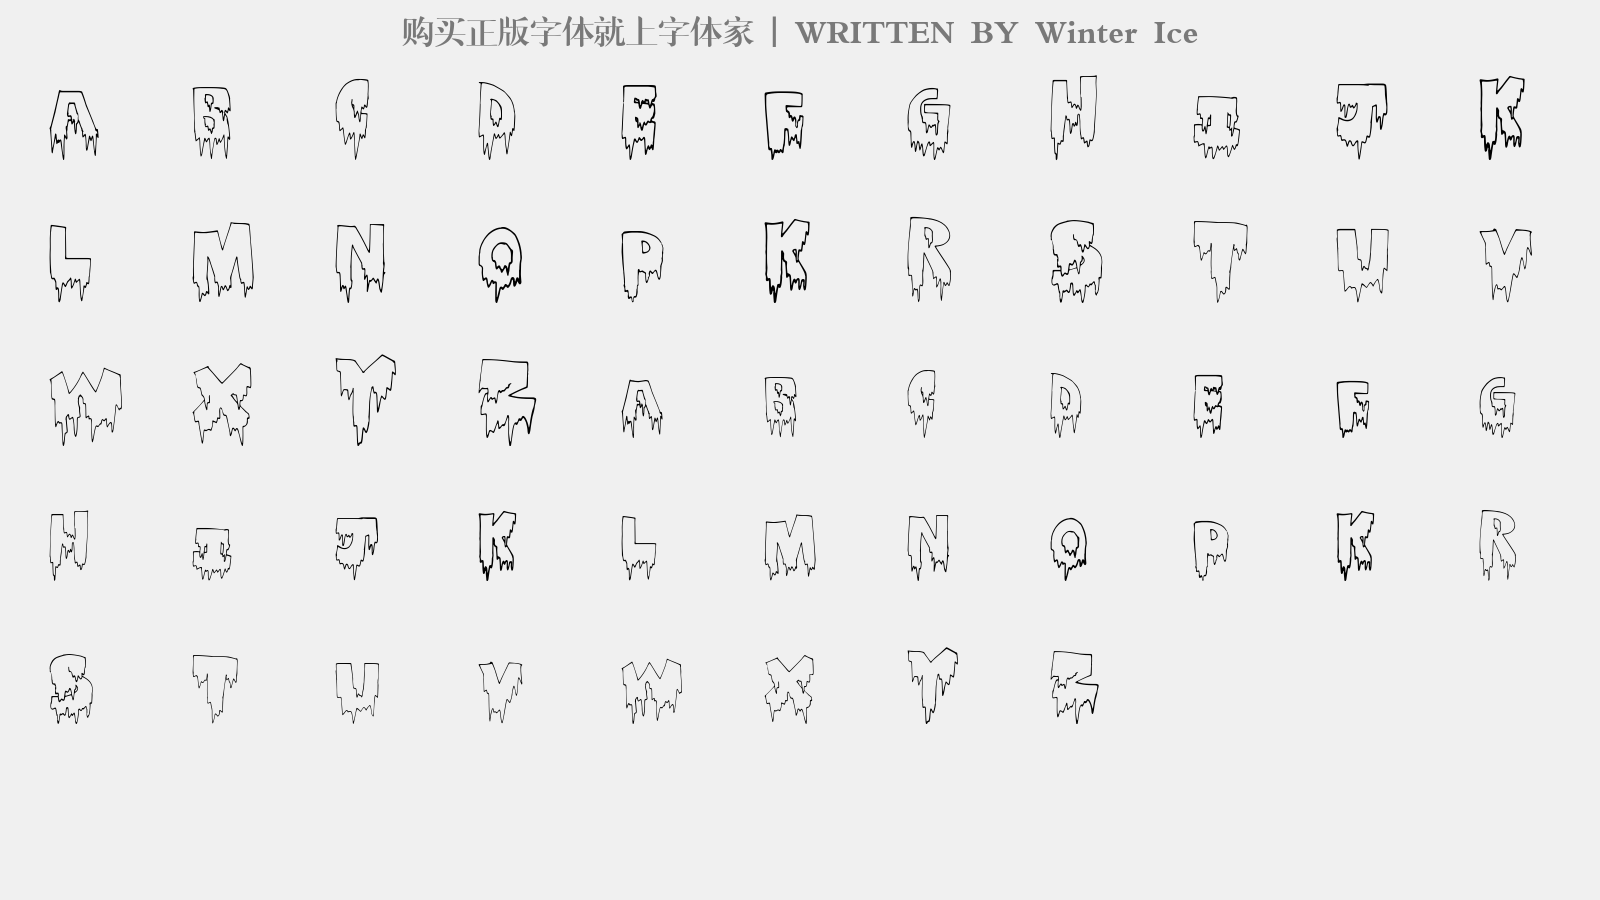 Winter Ice - 大写字母/小写字母/数字